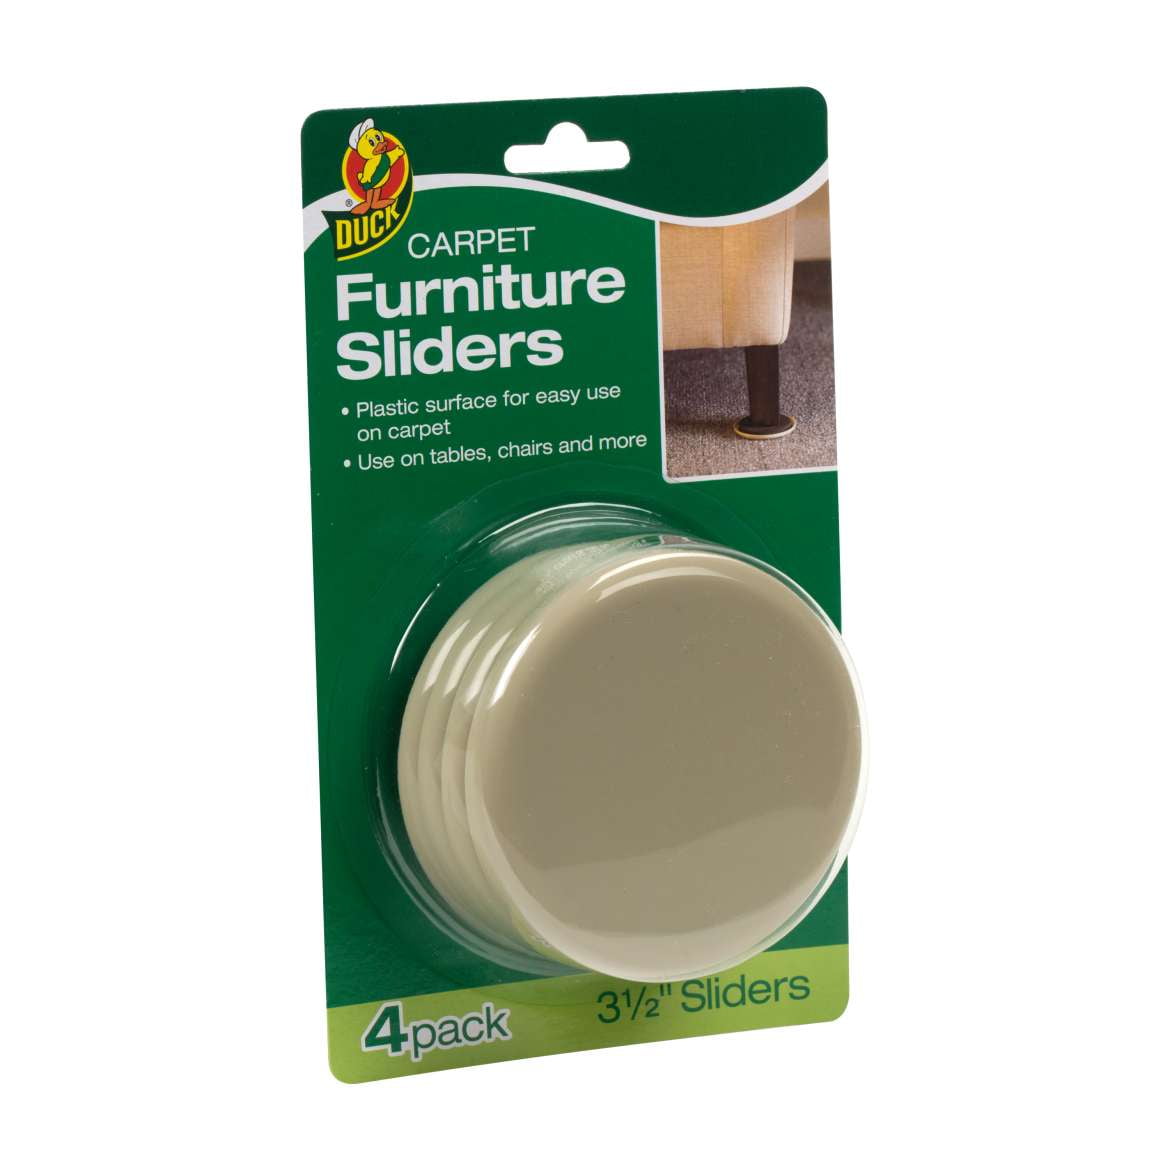 Duck Plastic Carpet Furniture Sliders 3 5 In Tan 4 Count